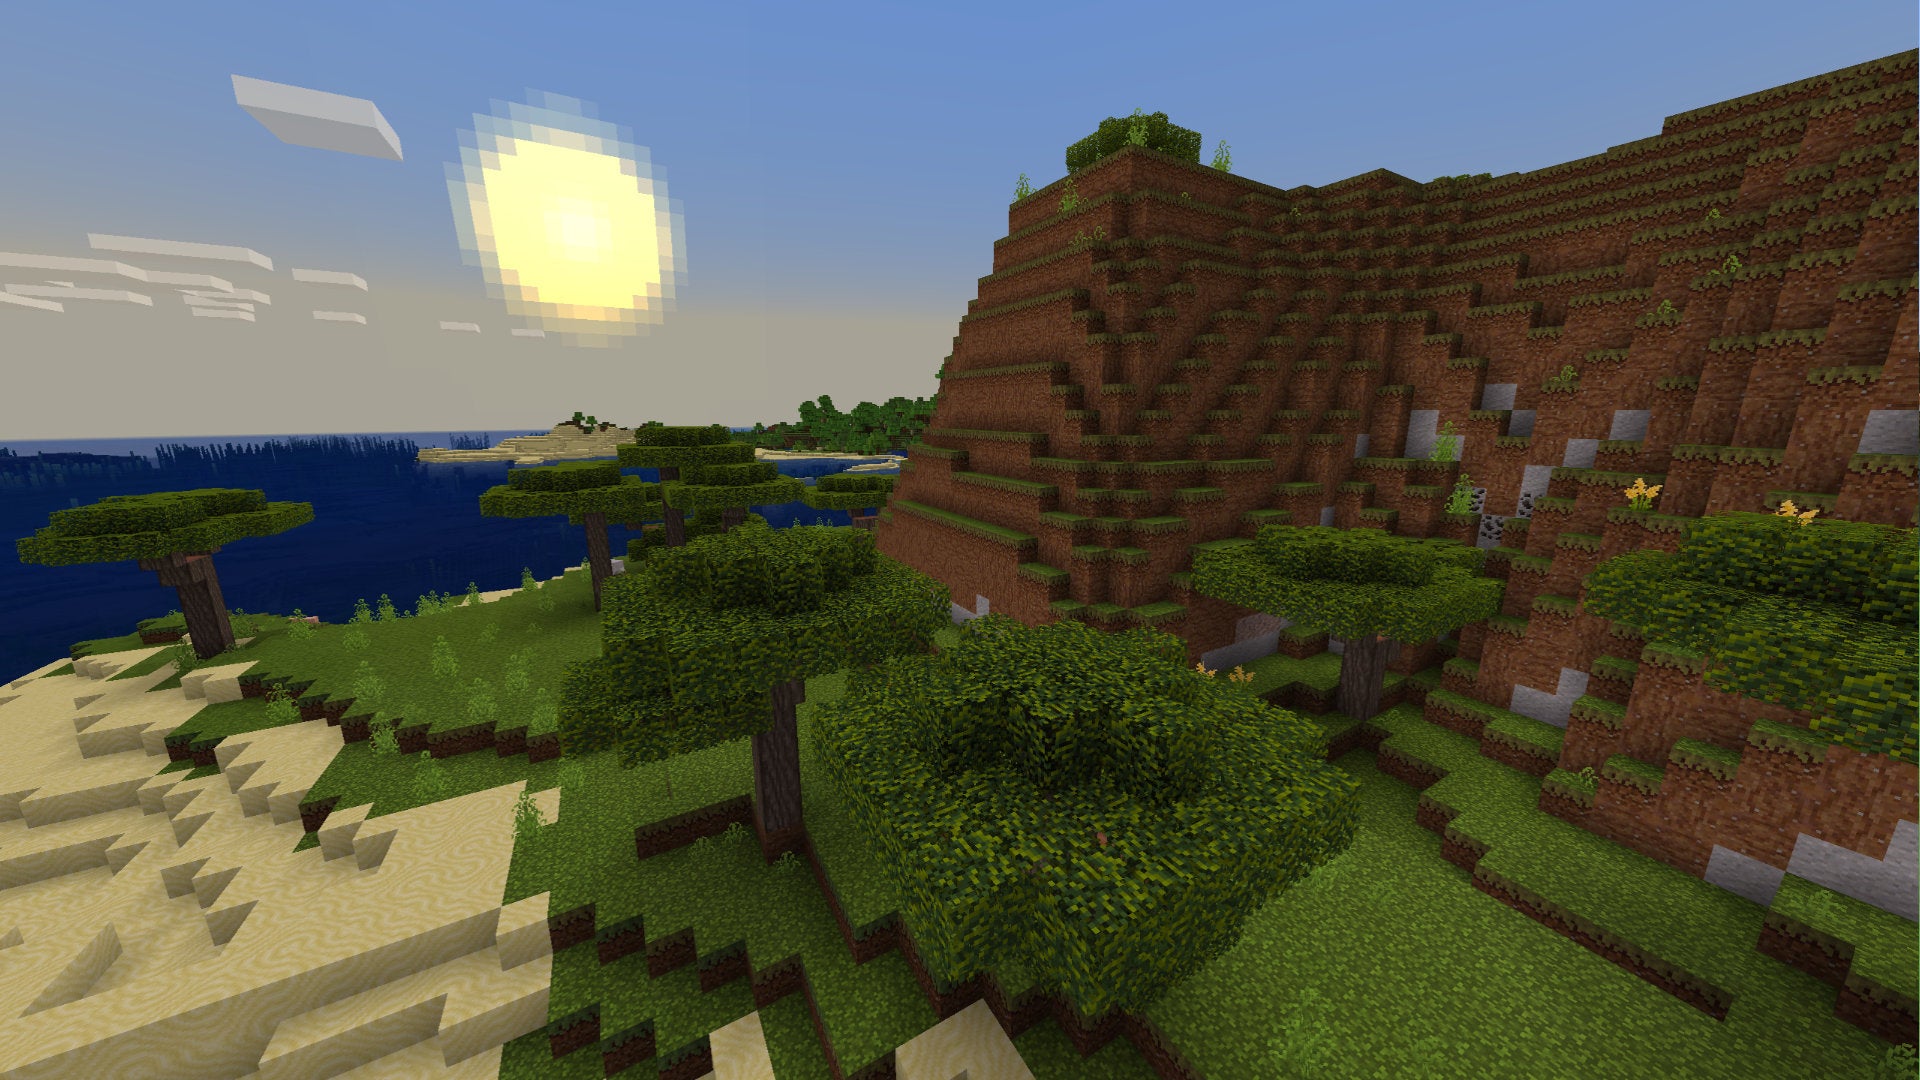 A Minecraft Bedrock screenshot of a landscape displayed using the Jehkoba's Fantasy Texture Pack.